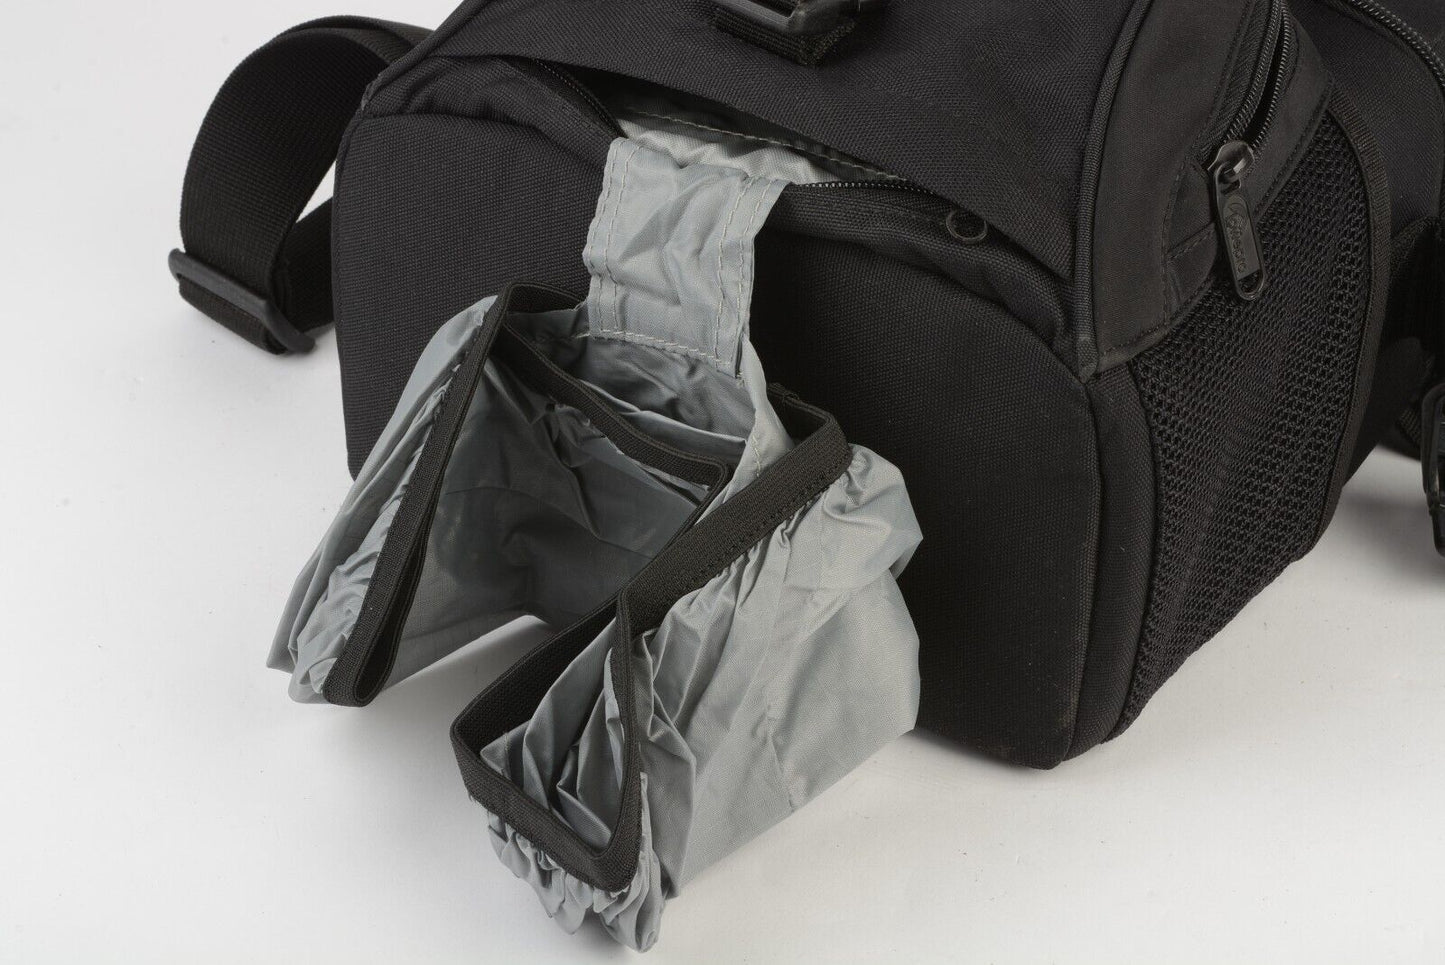 MINT- LOWEPRO NOVA 2 AW BLACK SHOULDER BAG, VERY CLEAN, BARELY USED